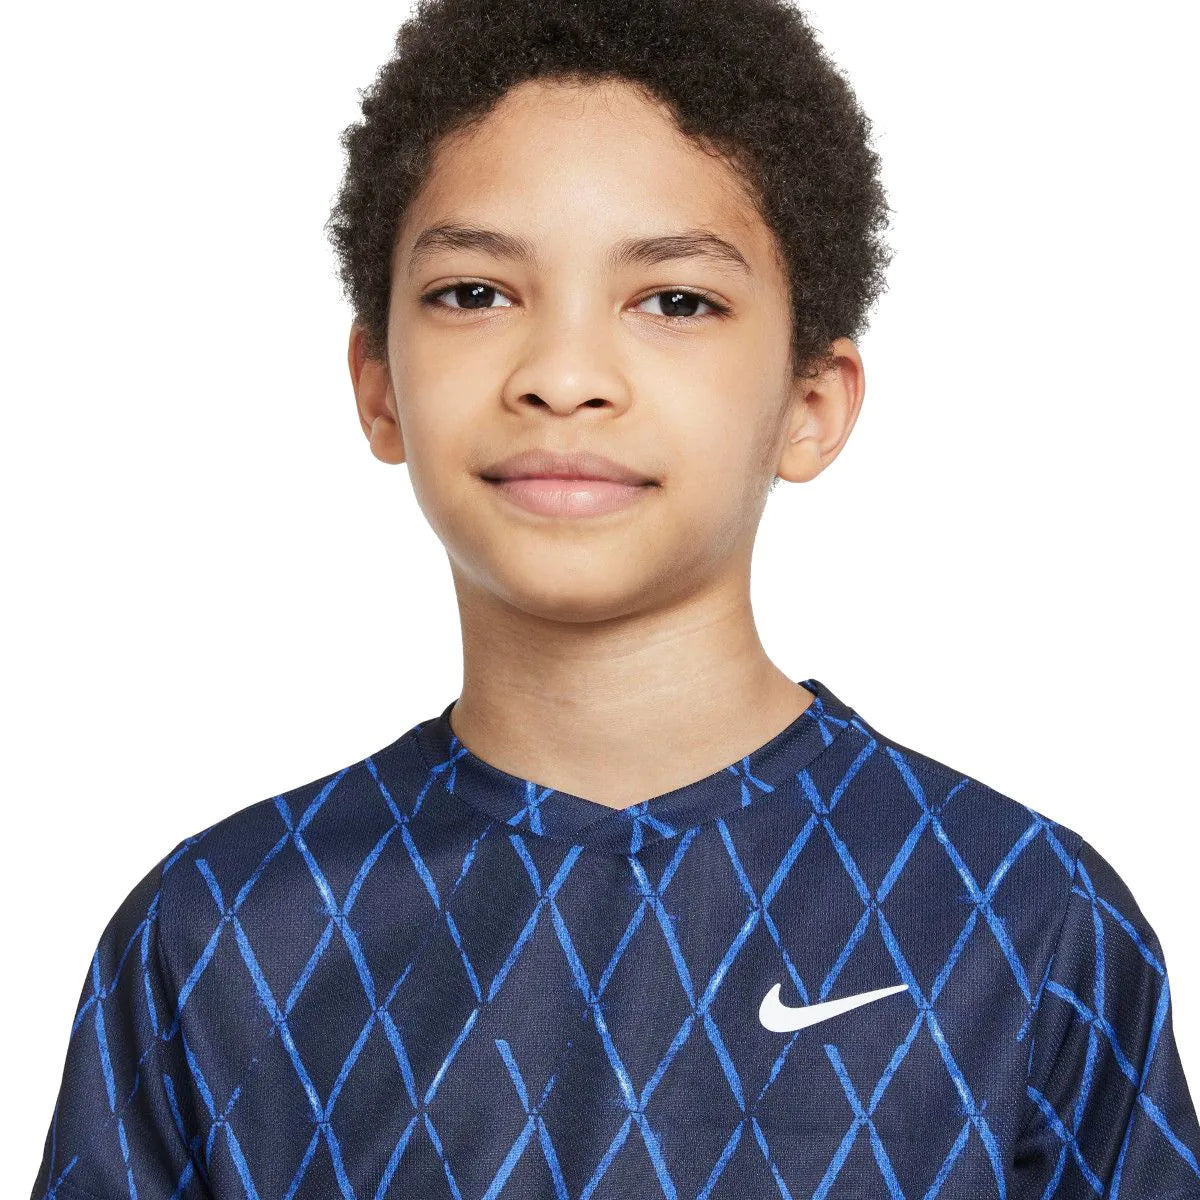 Nike Court Dri-Fit Victory Boy's Tennis Top